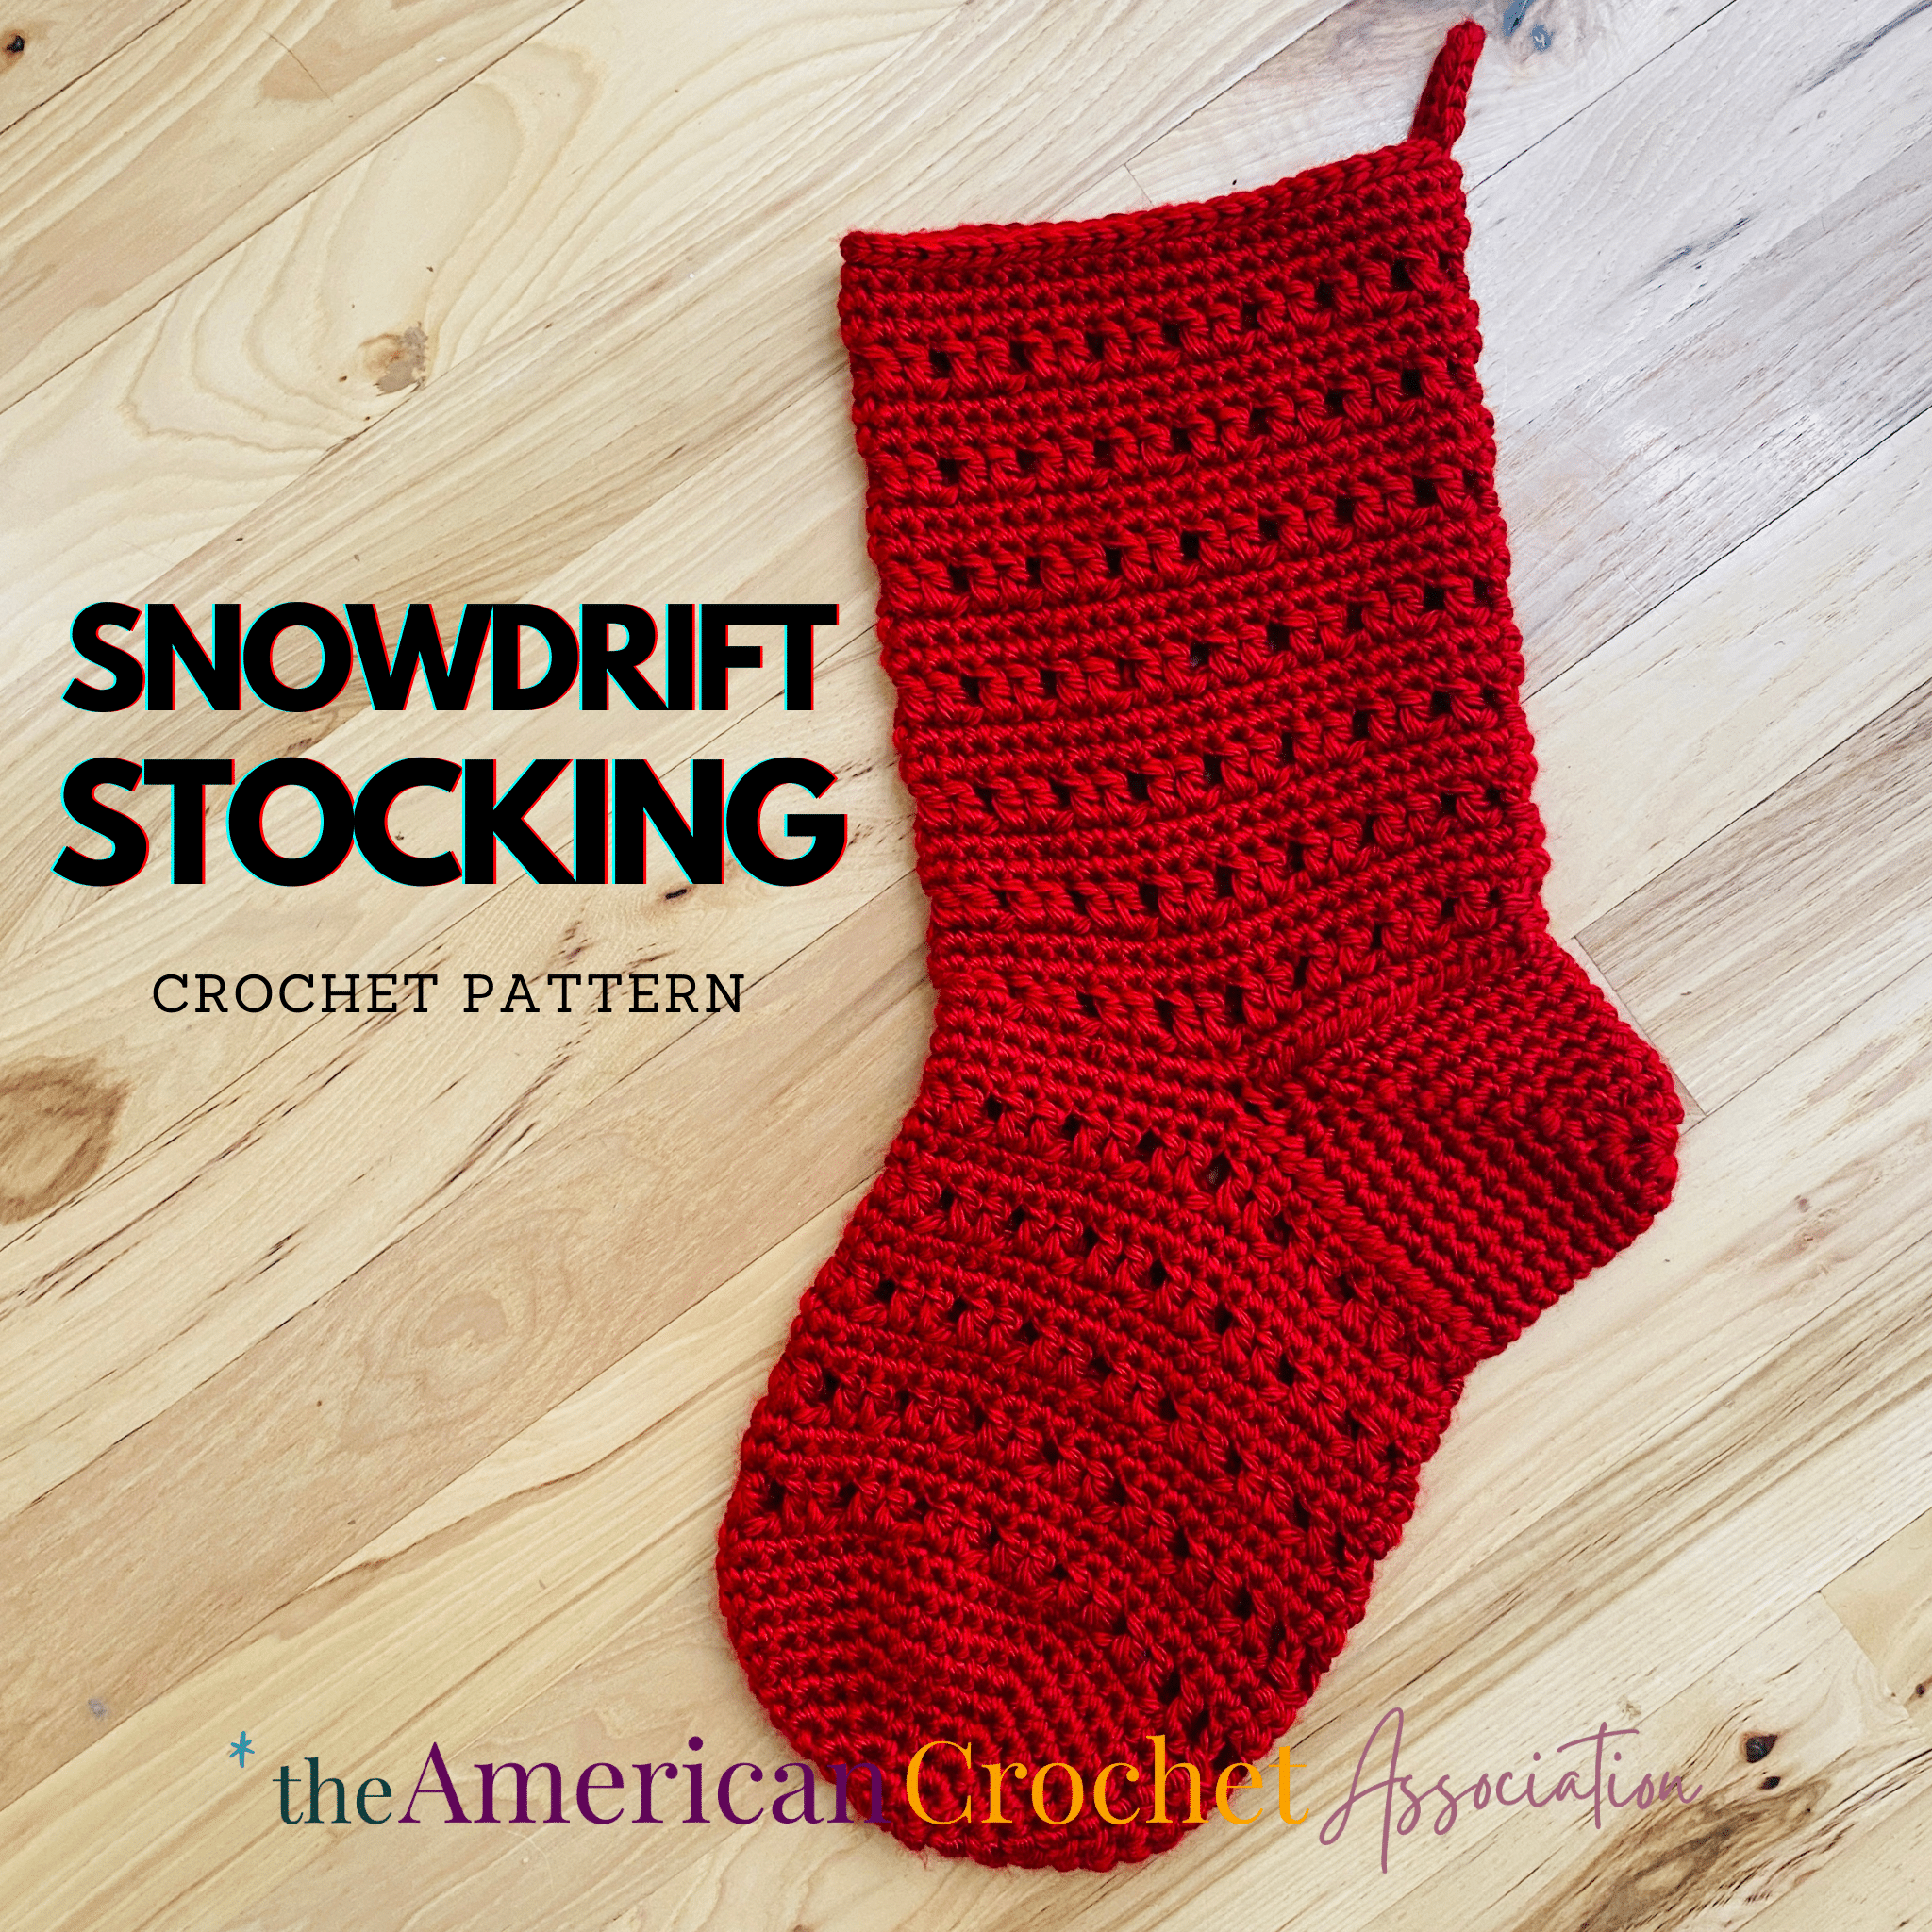 red crochet stocking on wooden floor